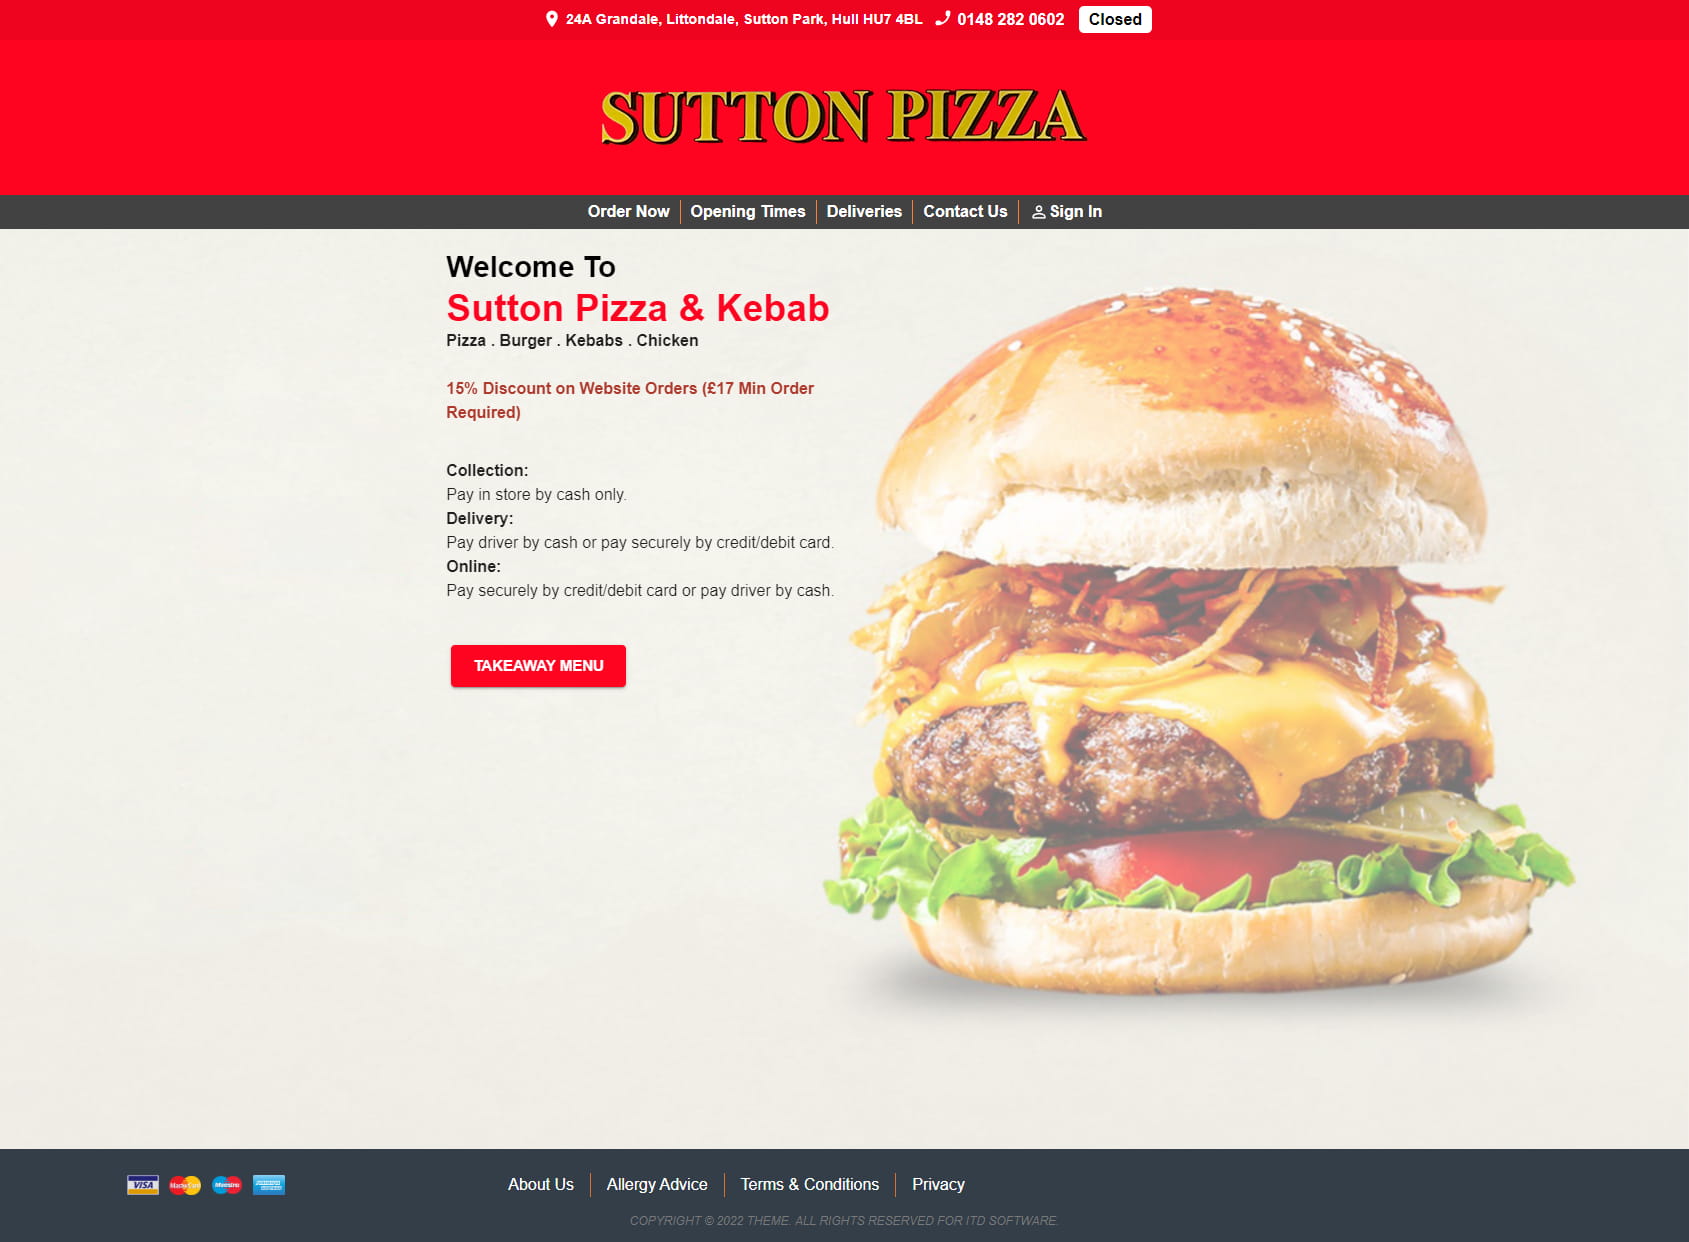 Sutton Pizza & Kebab